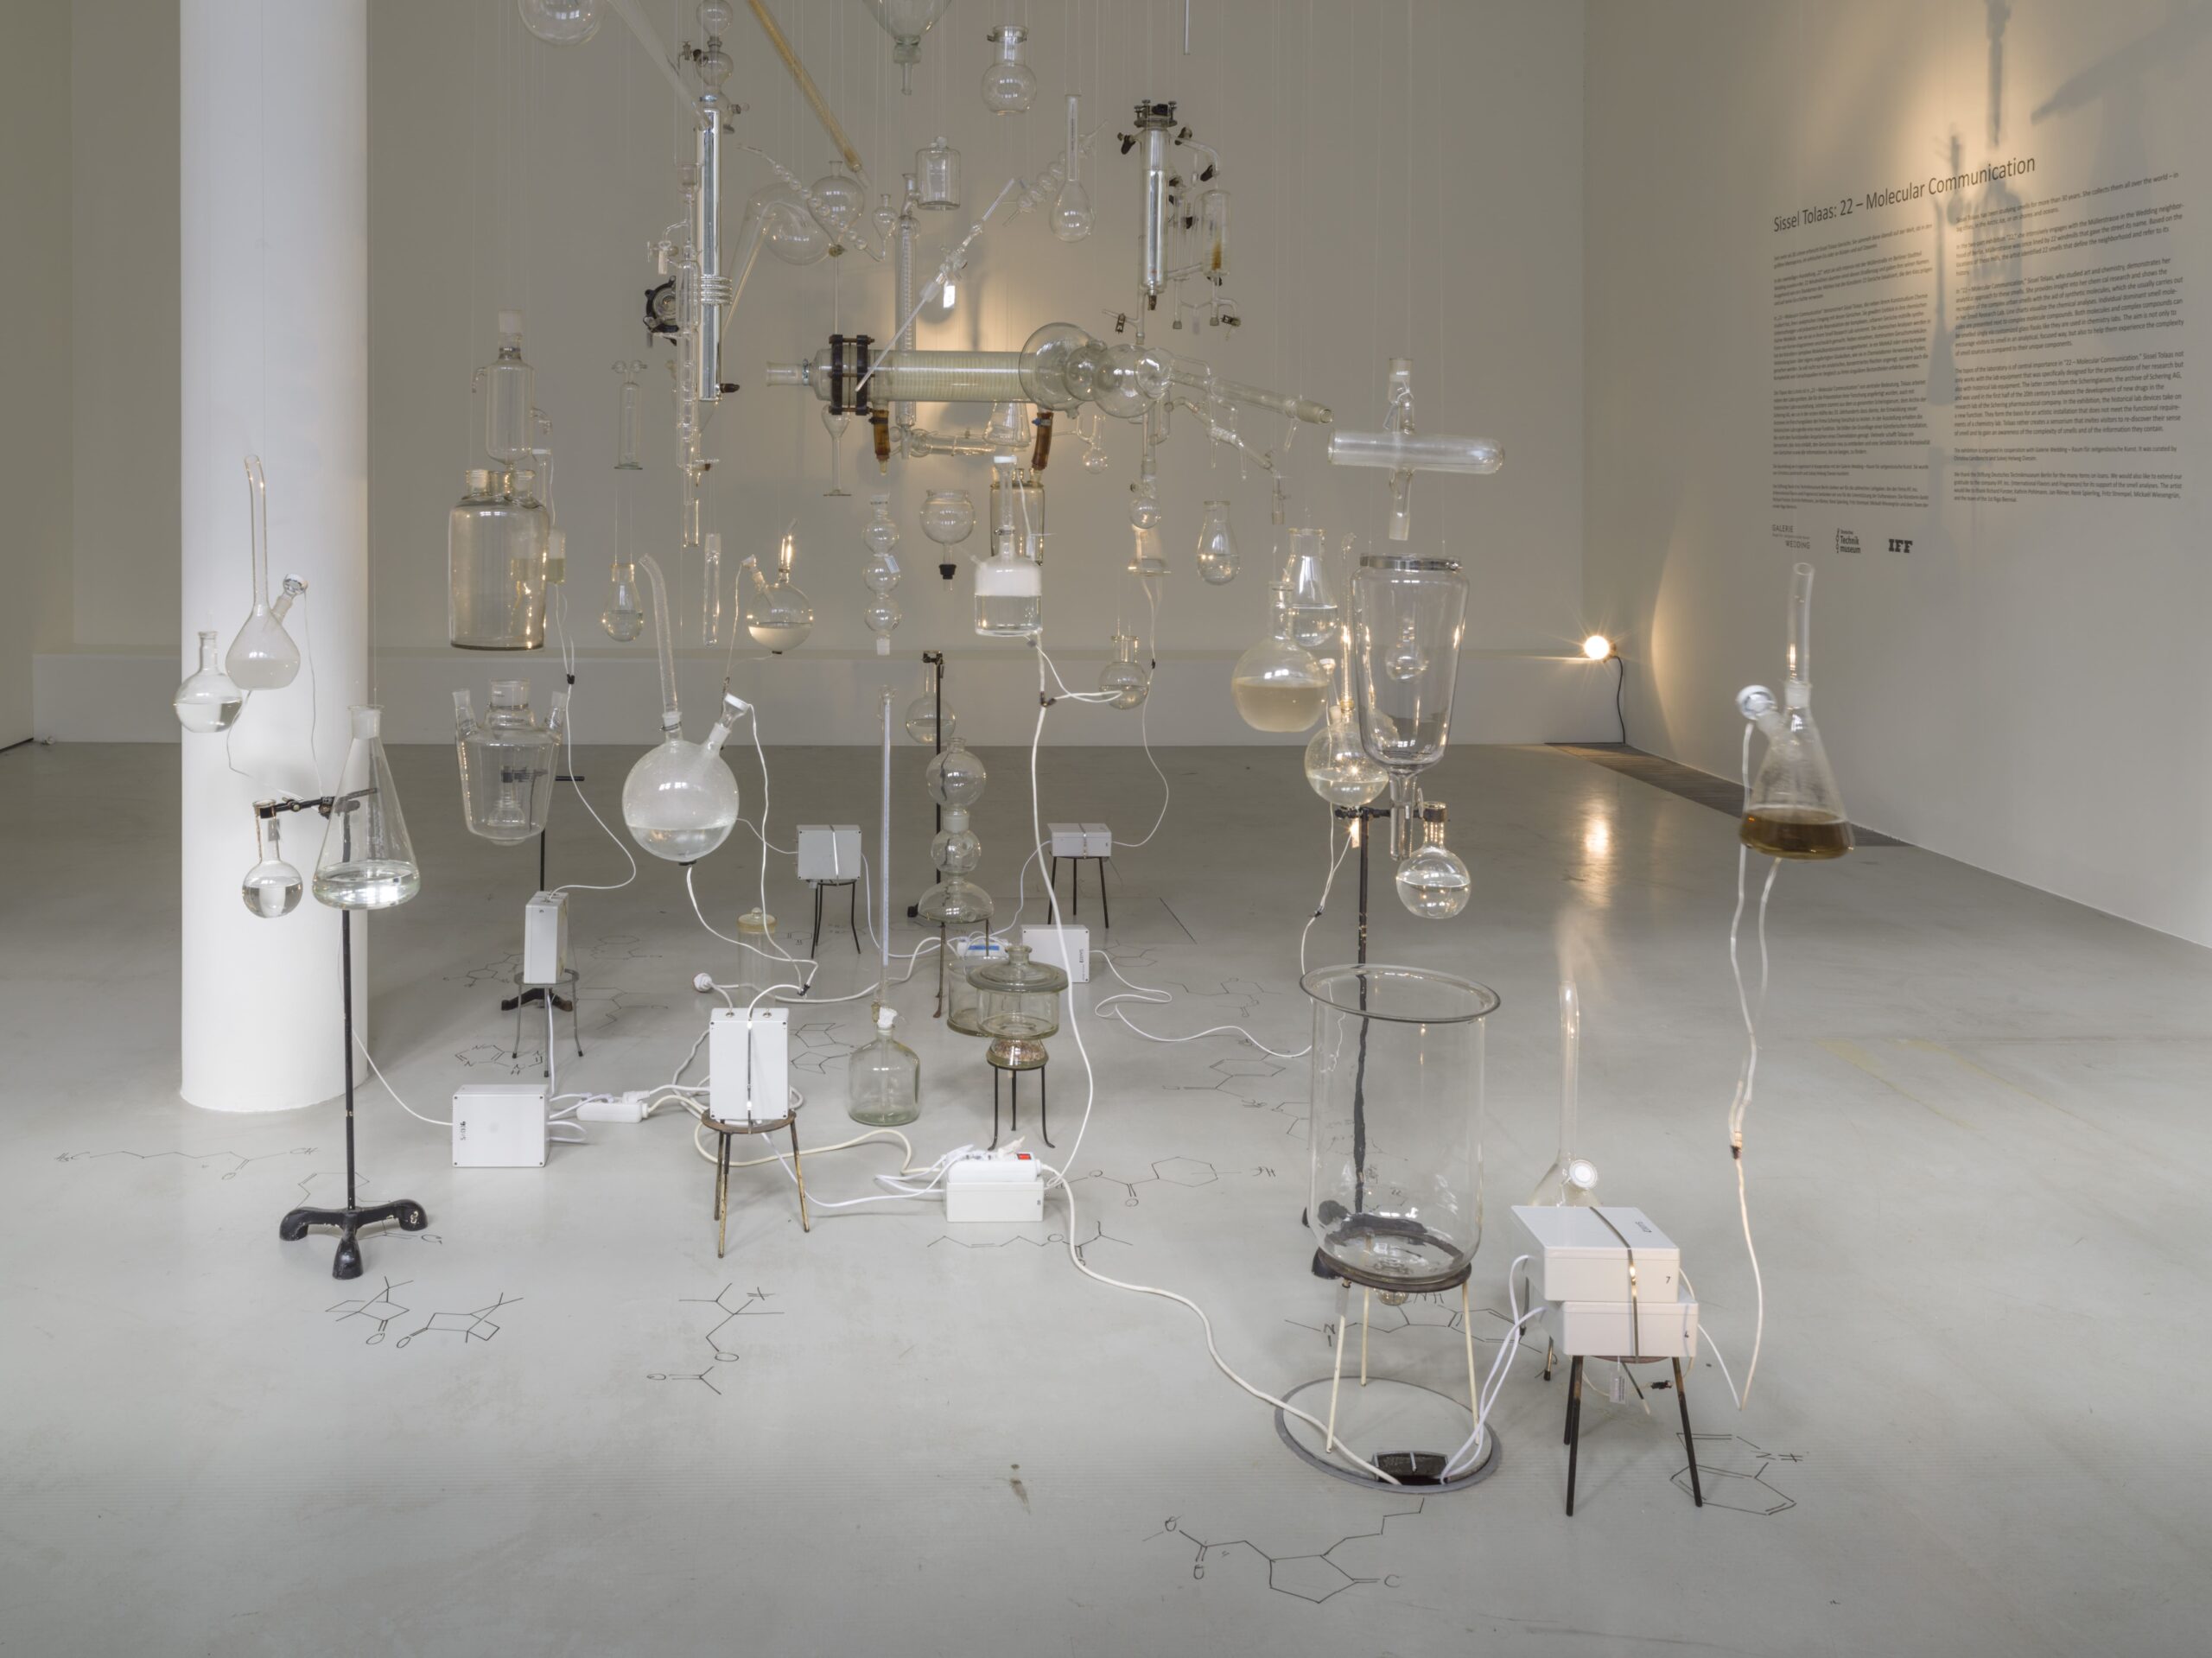 Sissel Tolaas, 22 - Molecular Communication, 2019, Schering Stiftung, installation view